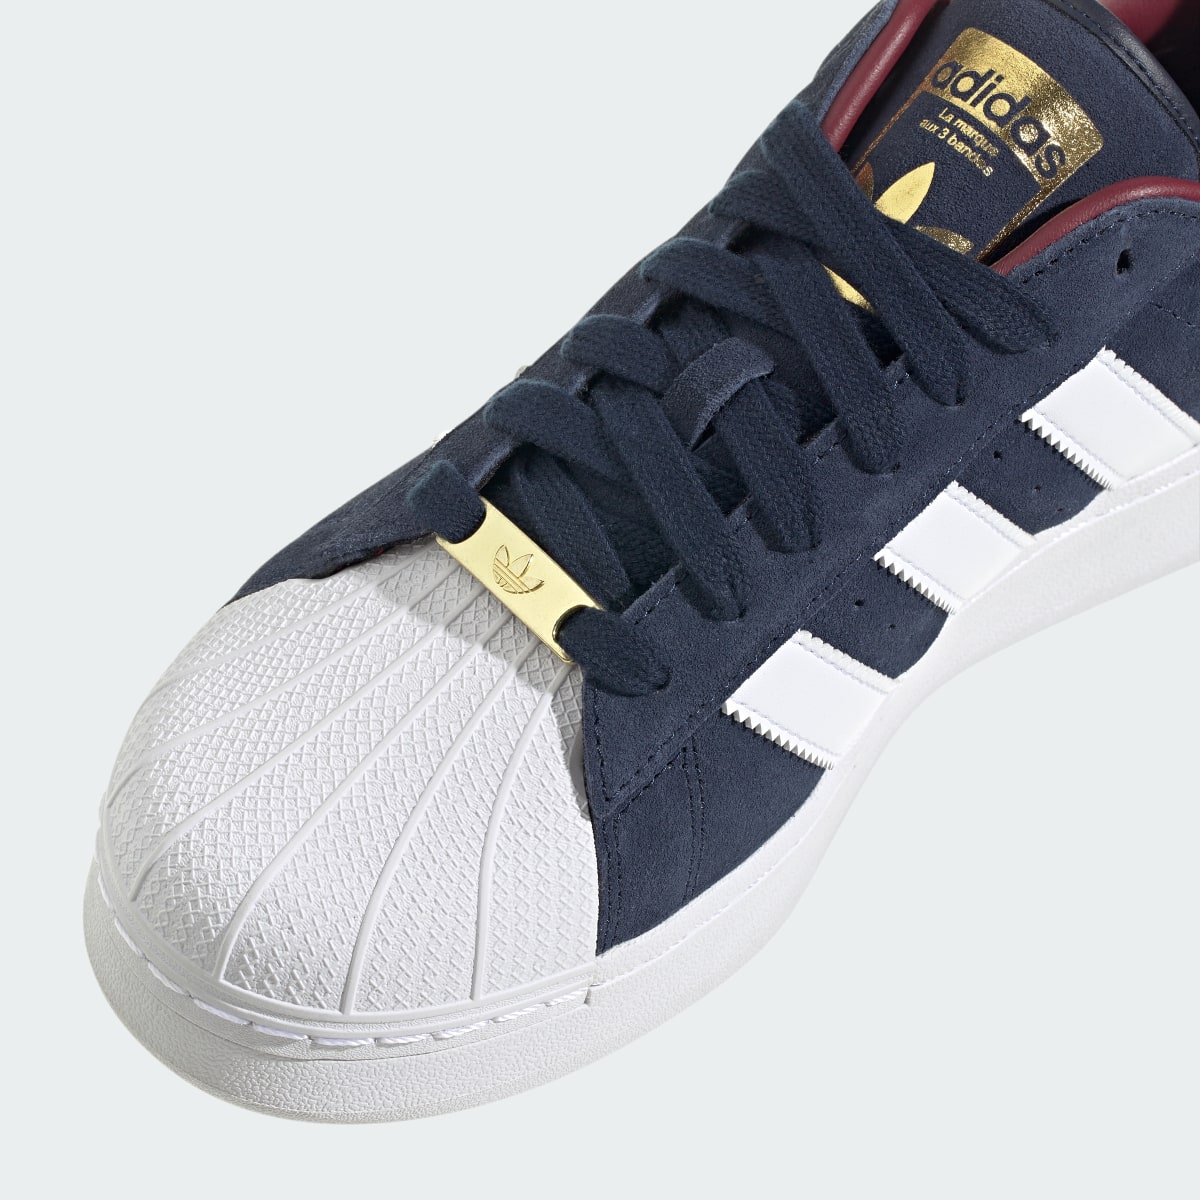 Adidas Superstar XLG Schuh. 10